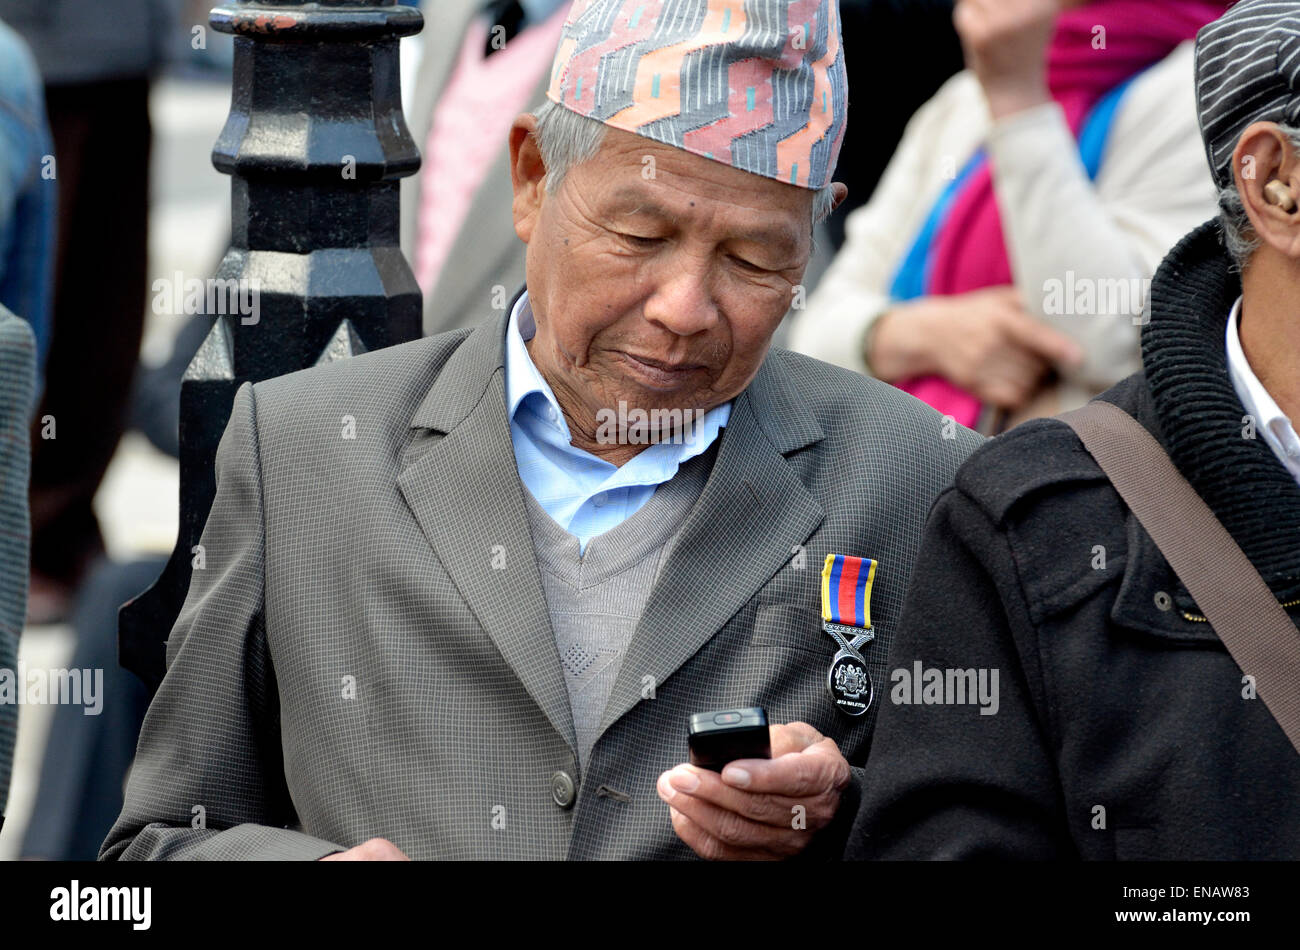 Elderly Nepalese man / retired Gurkha using his mobile phone, London 2015, wearing a Dhaka topi - traditional hat Stock Photo